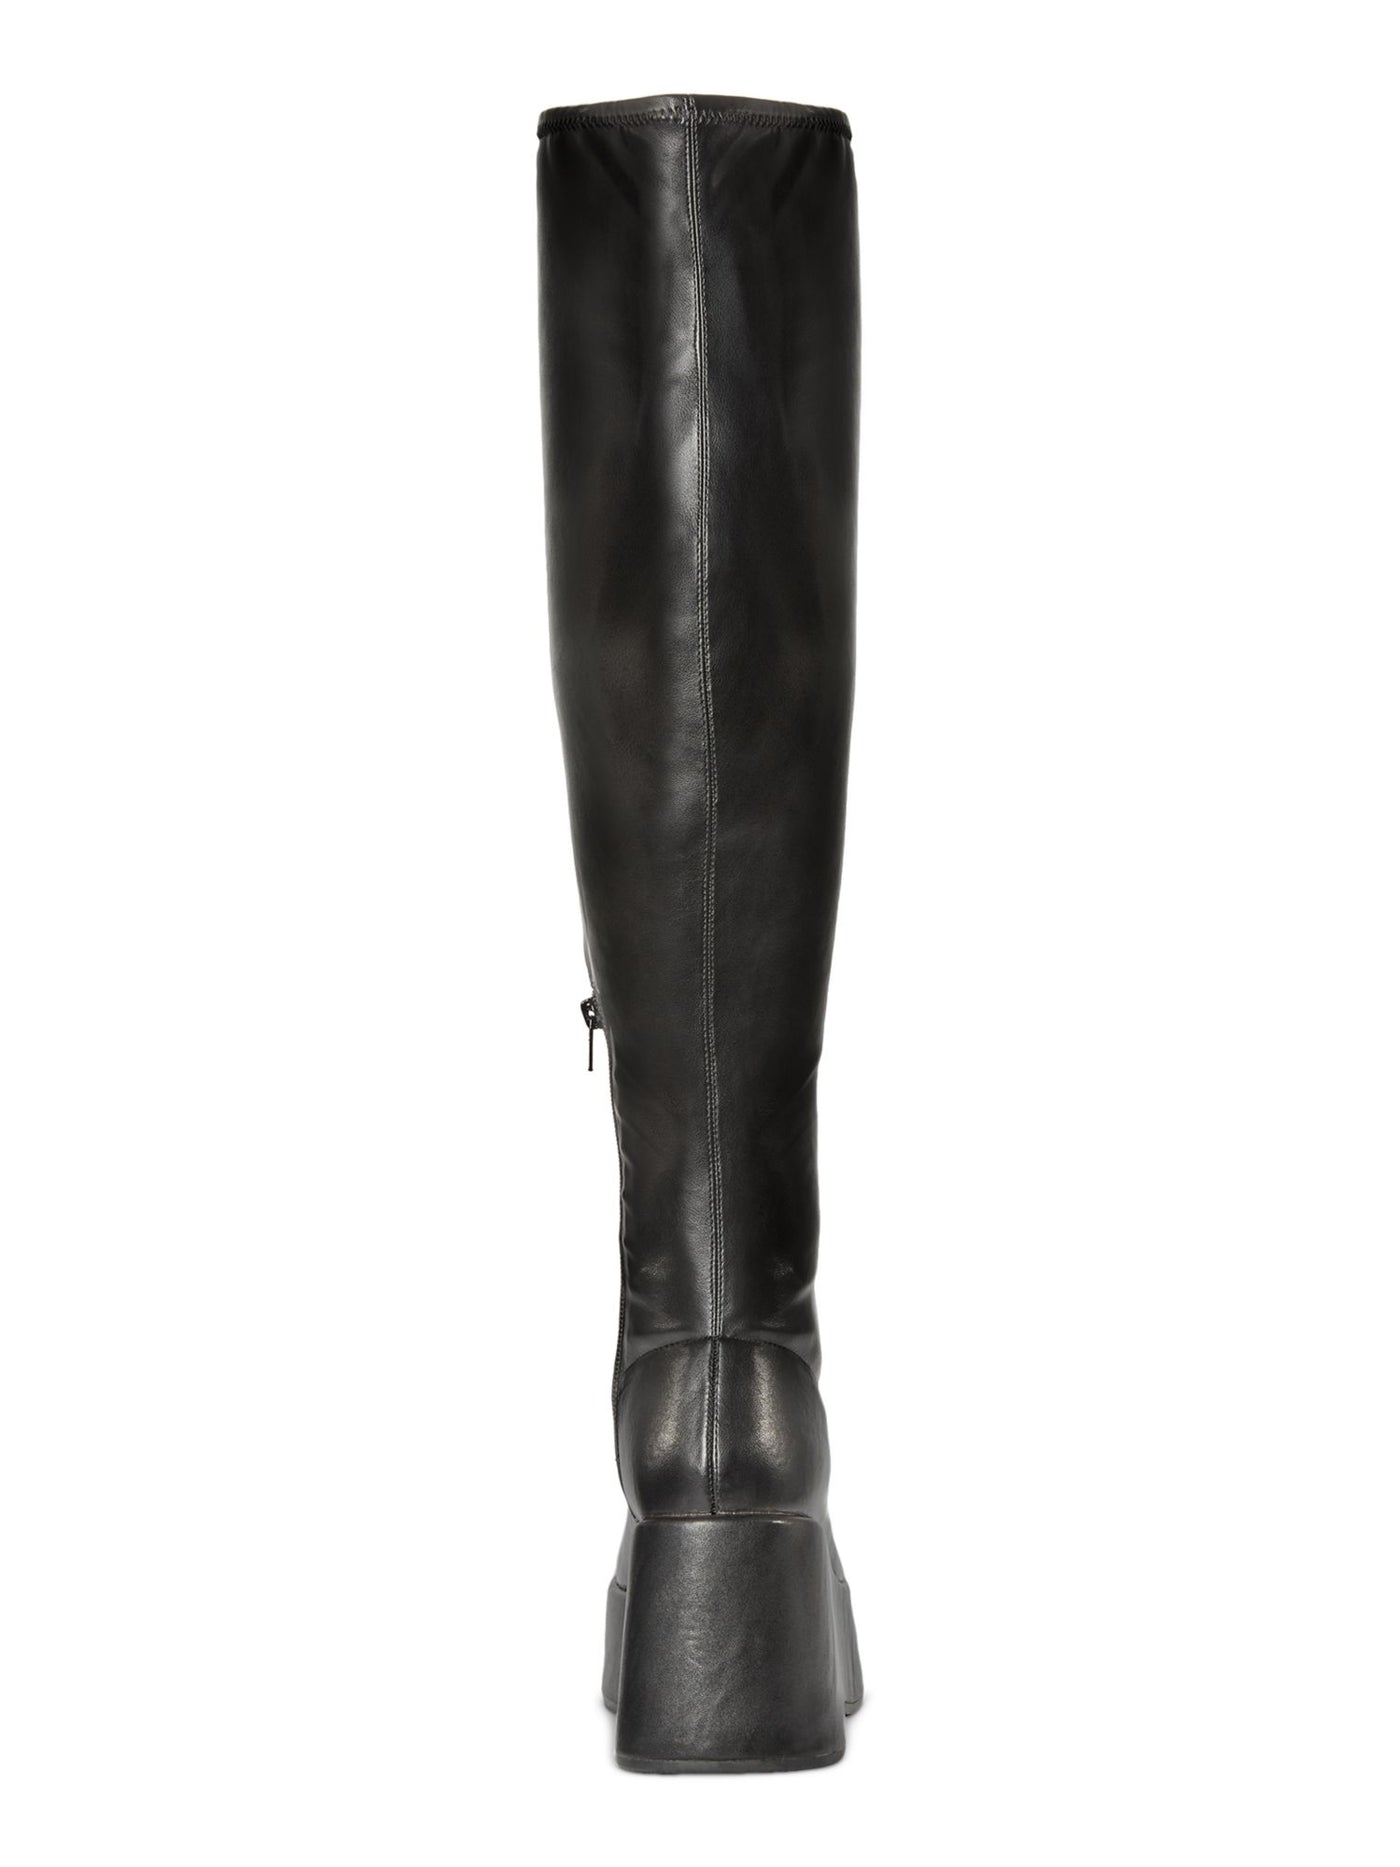 WILD PAIR Womens Black 2" Platform Padded Enchantt Round Toe Wedge Zip-Up Dress Boots Shoes 9.5 M